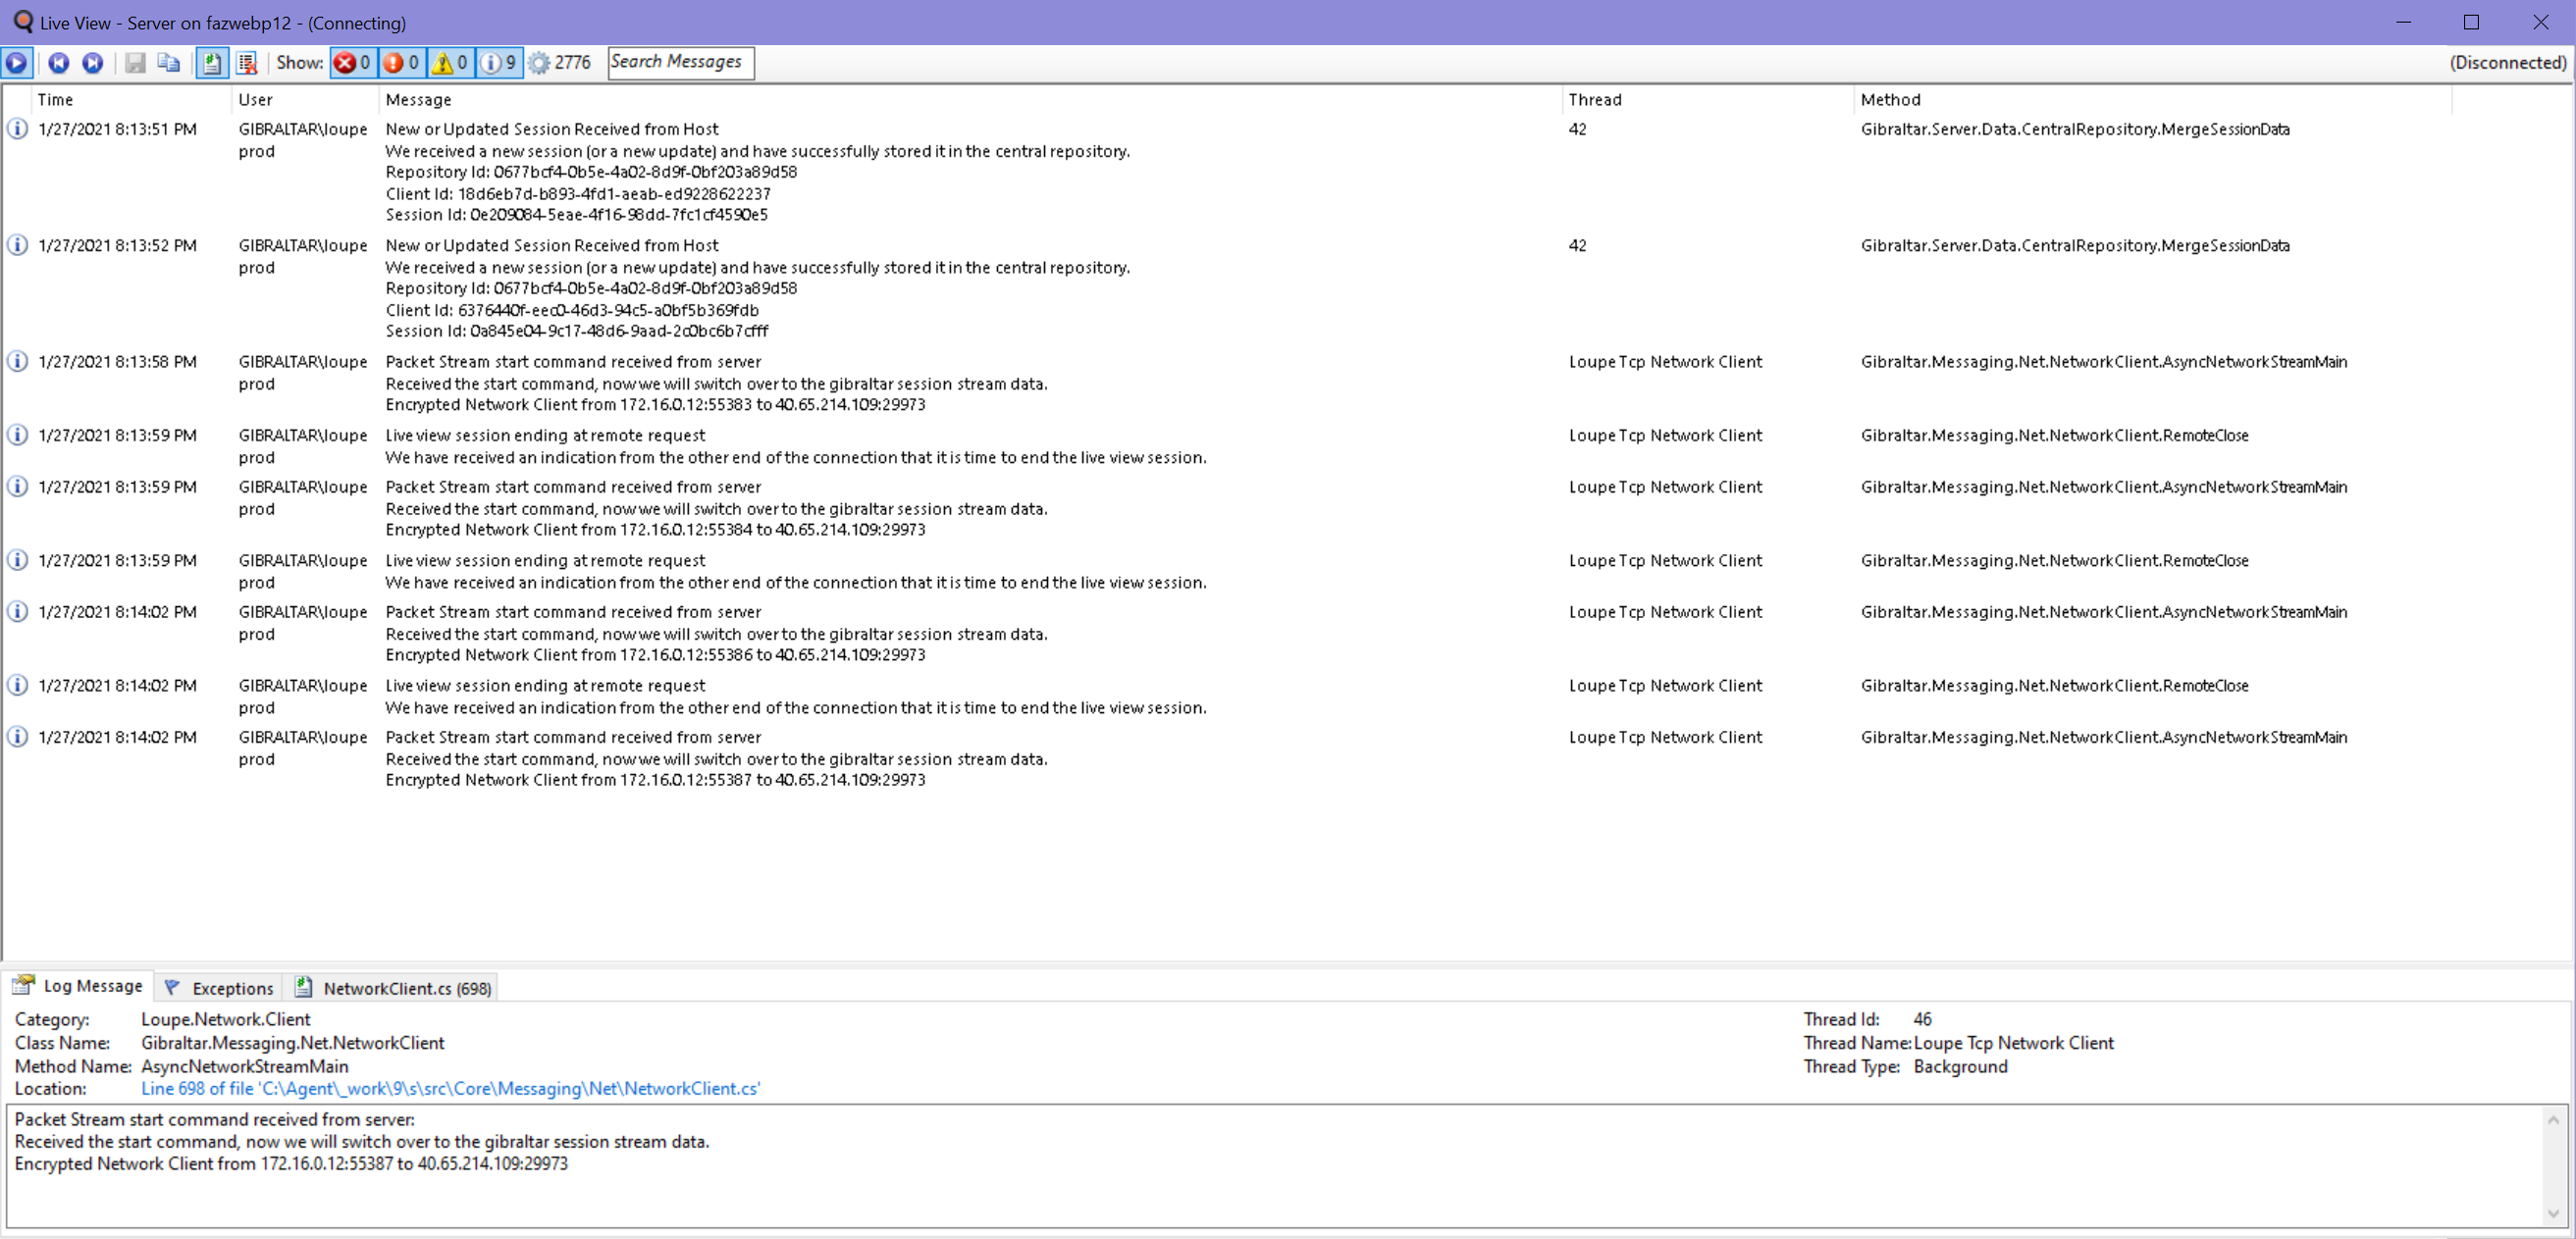 Screenshot of Loupe Desktop Session Live View